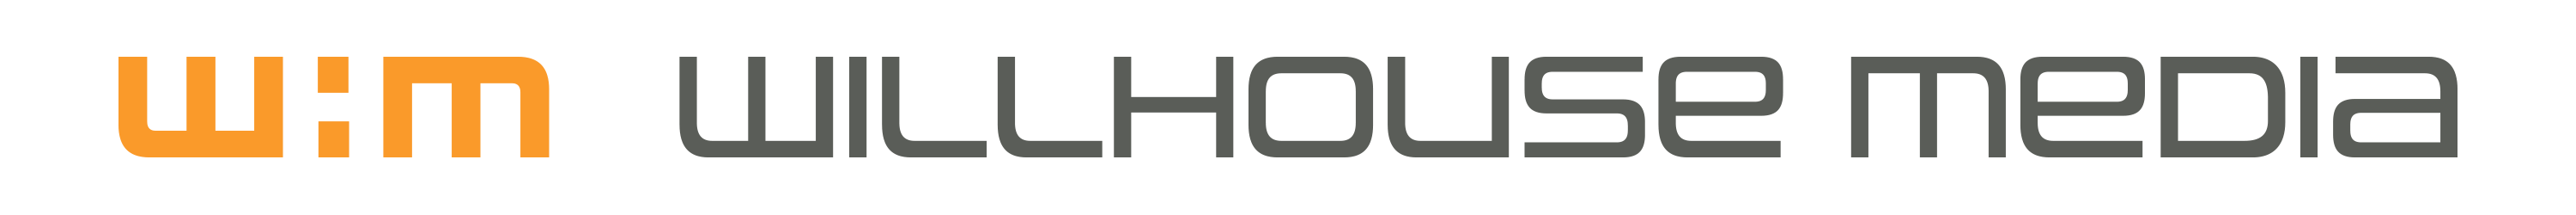 WillHouse Media Logo